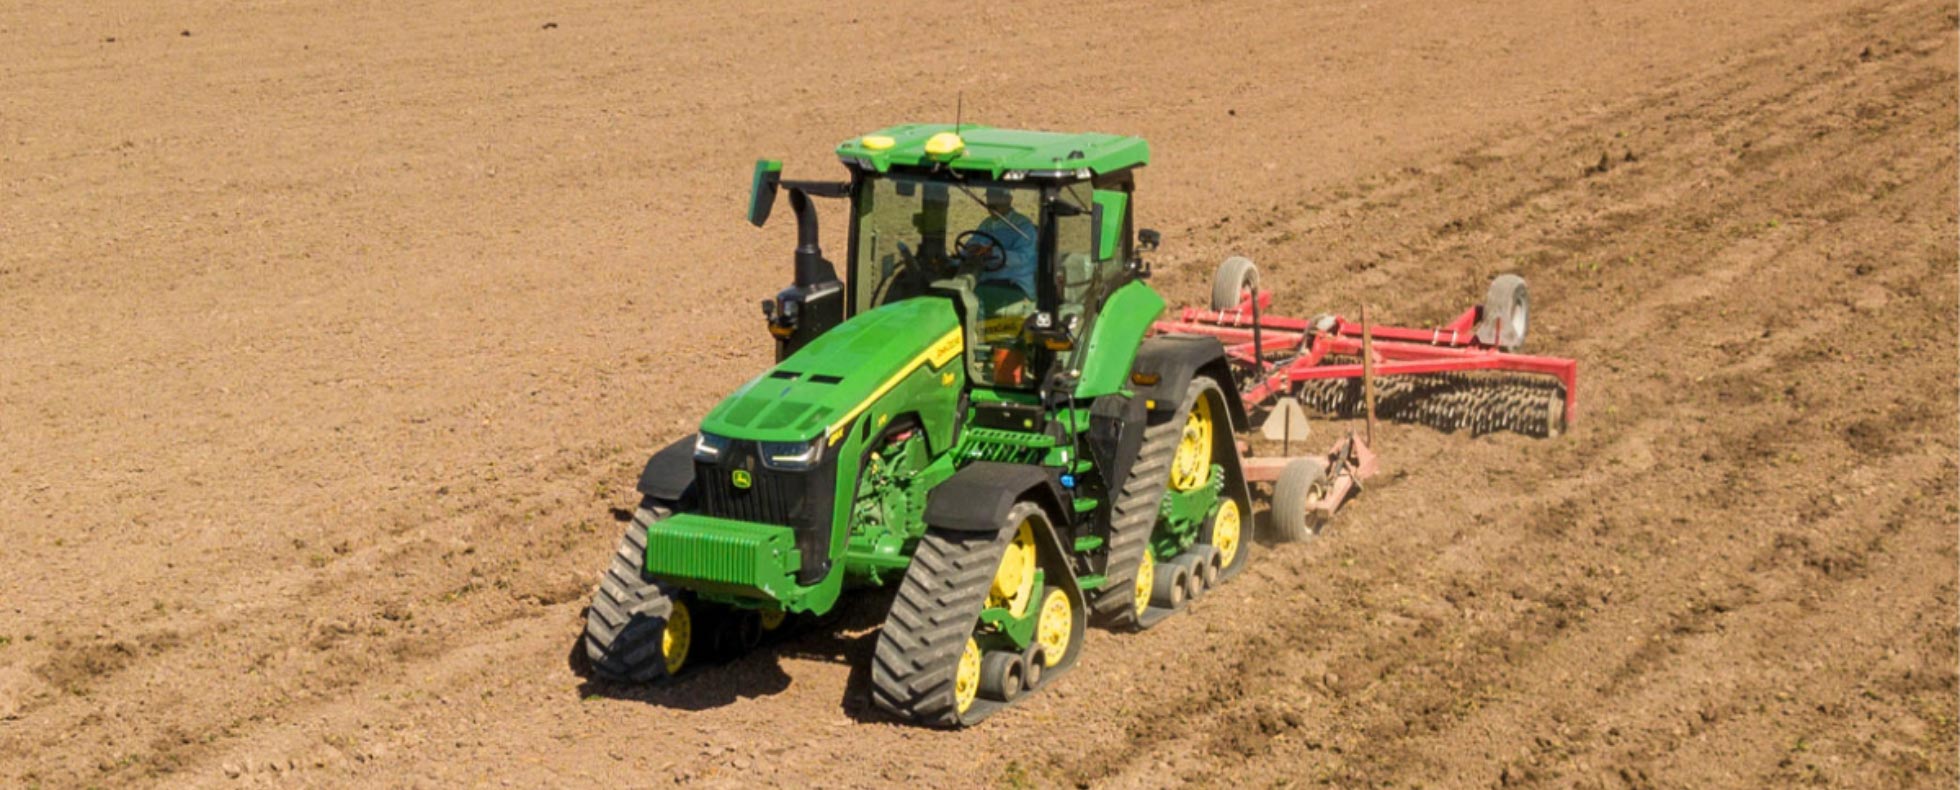 RDO Equipment Co. and John Deere Tractors Team Up for a Yuma Farmer